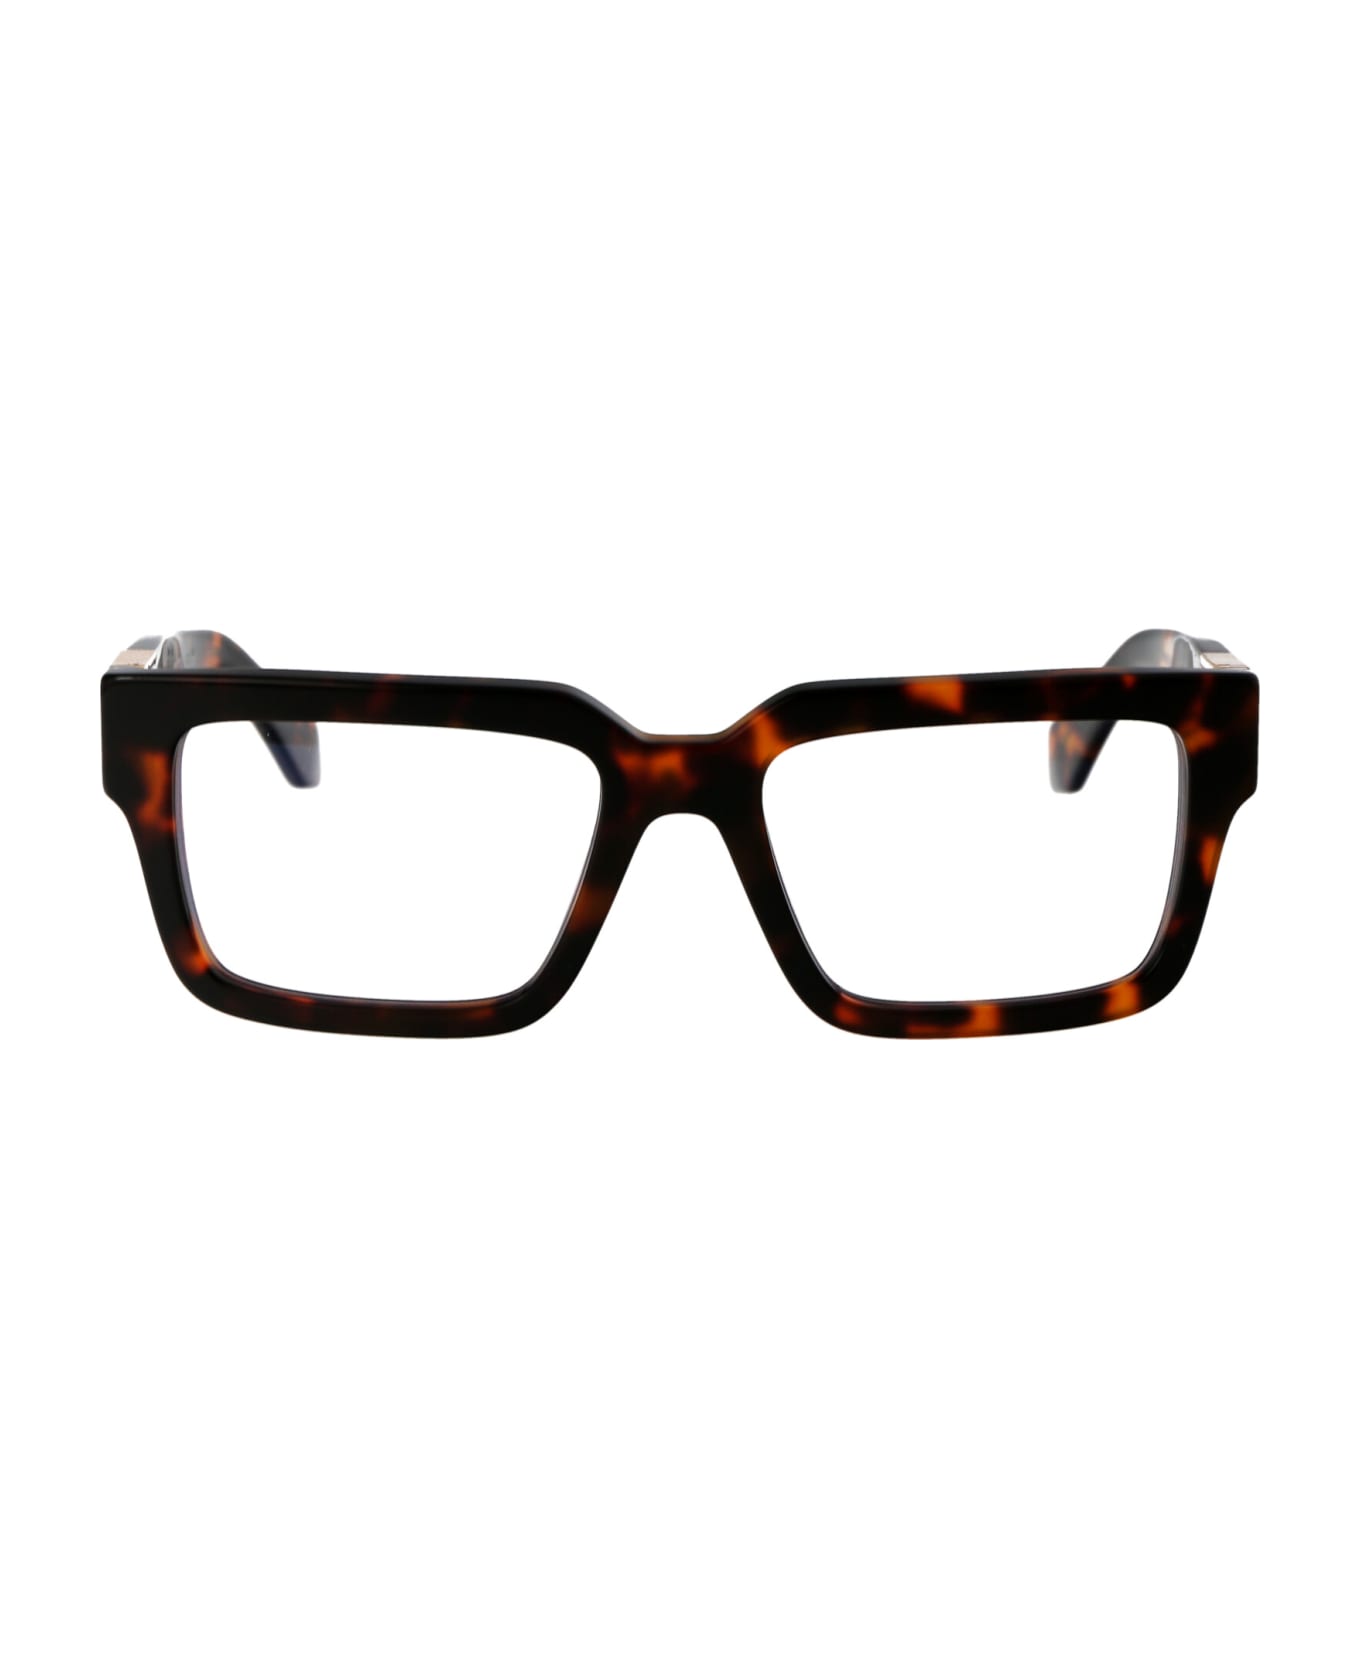 Off-White Optical Style 15 Glasses - 6000 HAVANA